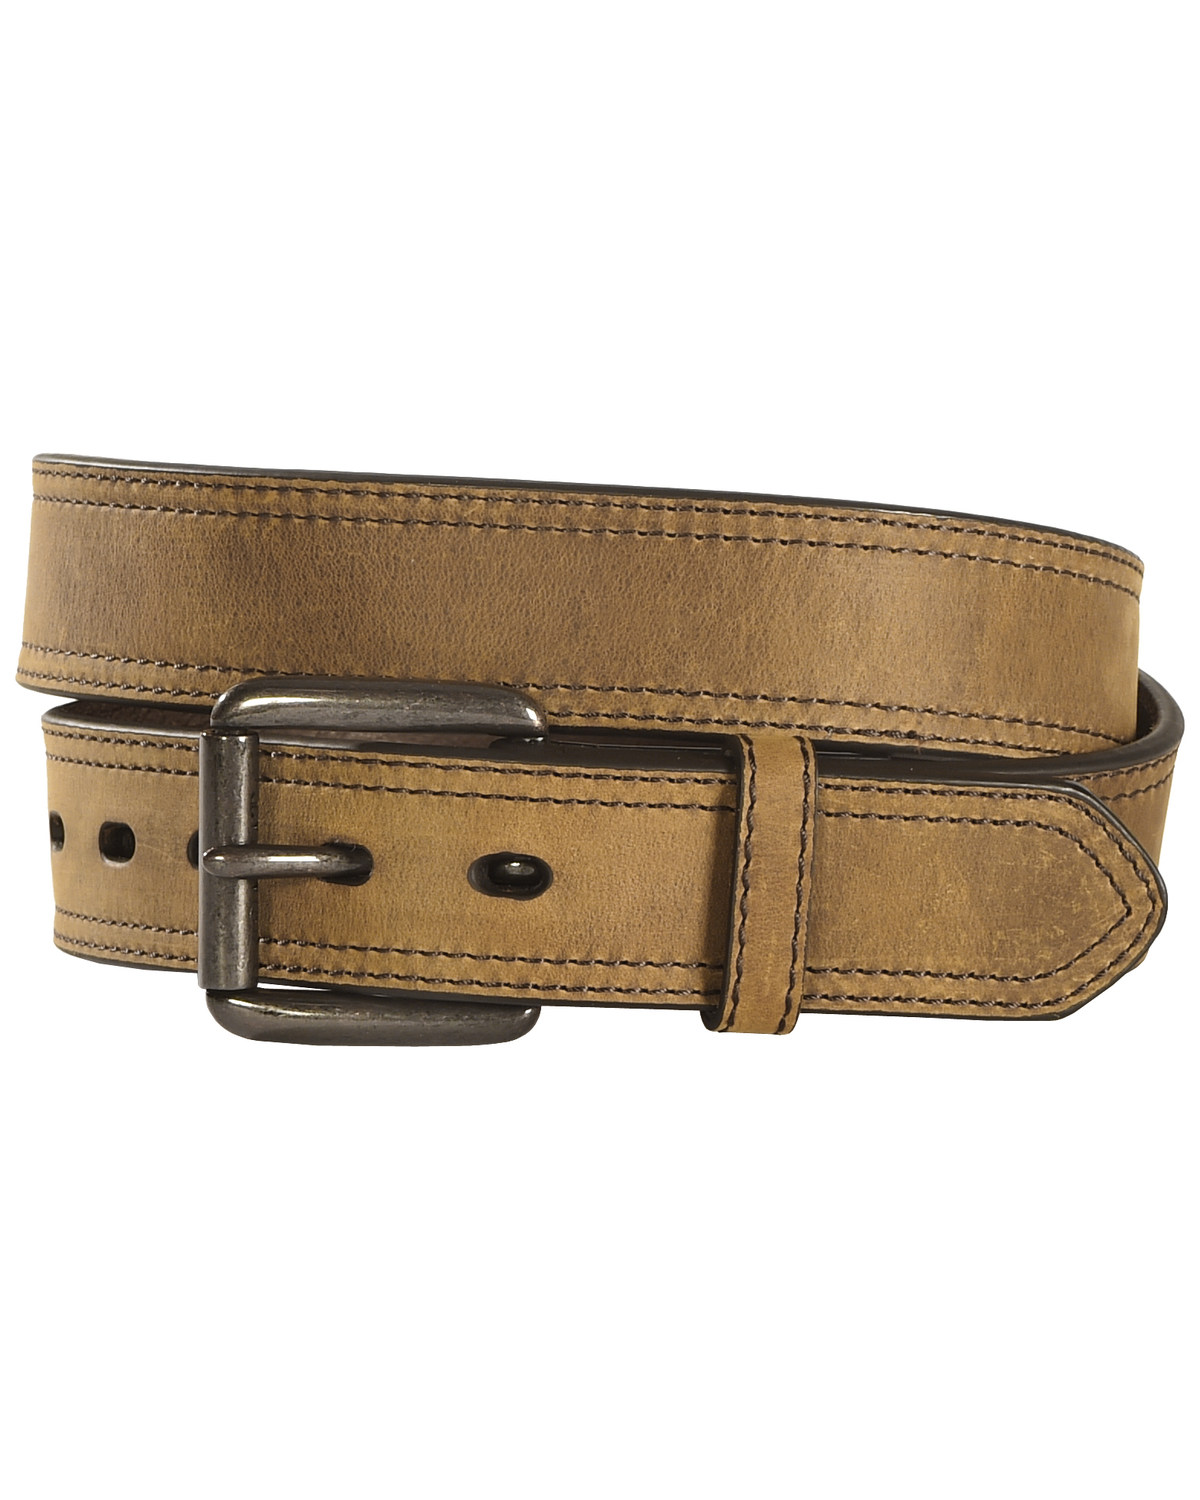 Ariat Men's Basic Jean Leather Belt